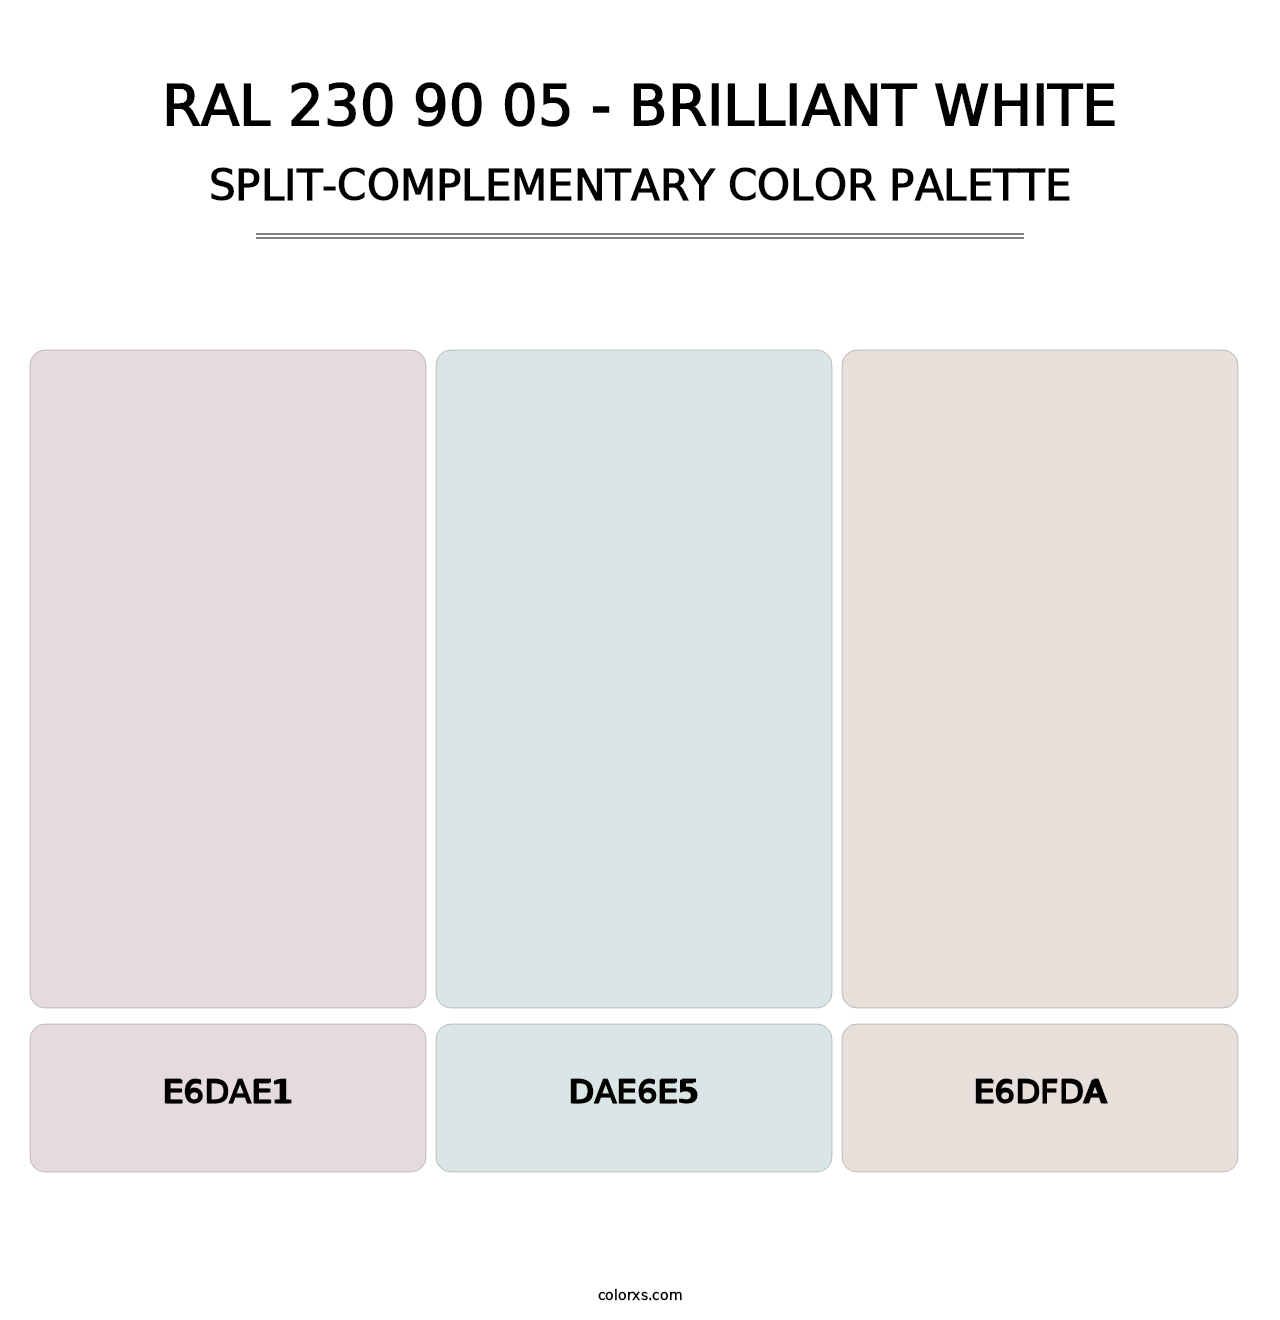 RAL 230 90 05 - Brilliant White - Split-Complementary Color Palette